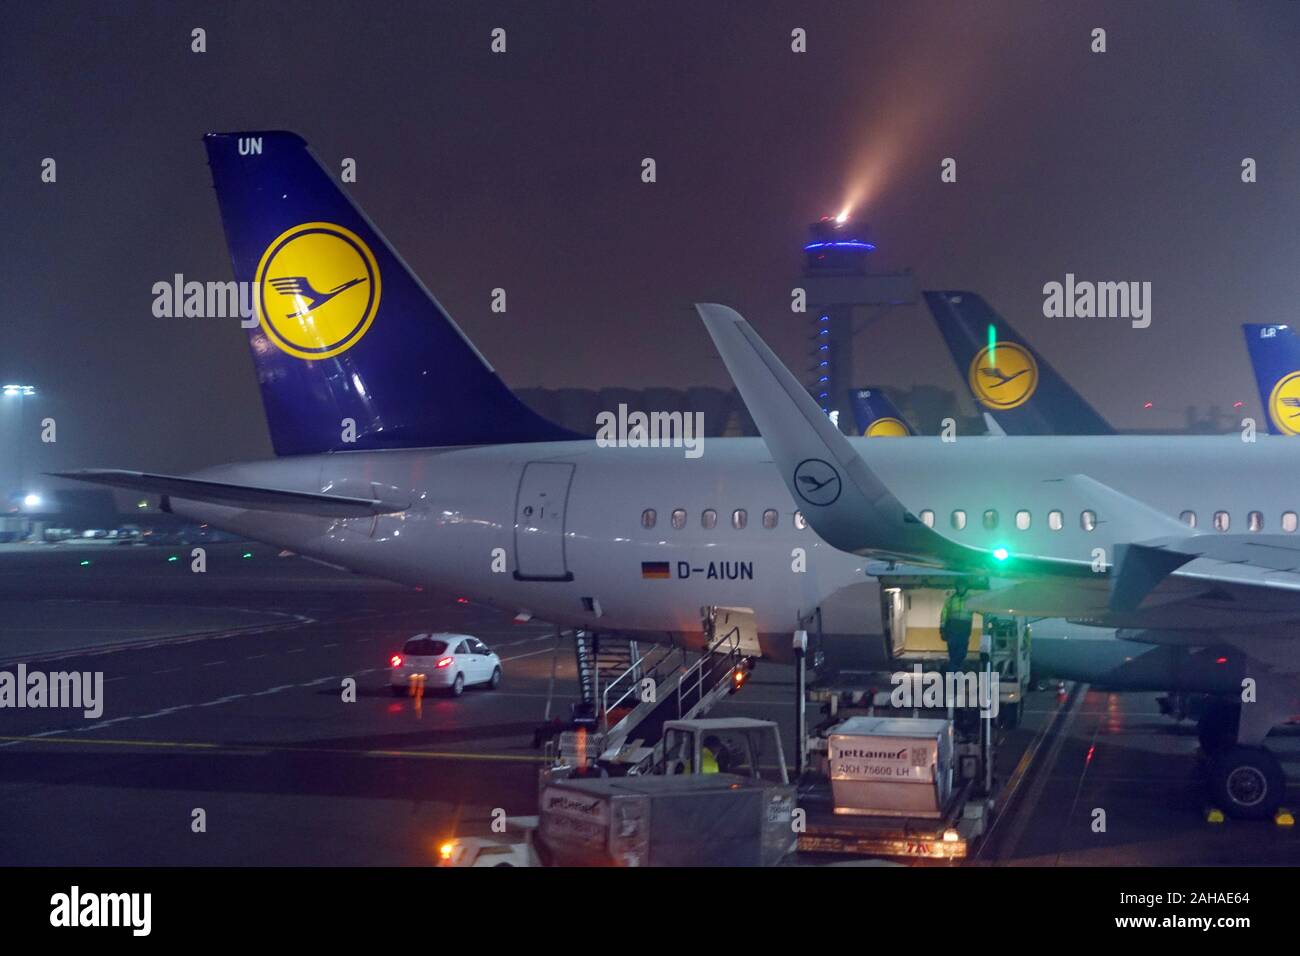 05.12.2016, Frankfurt am Main, Hessen, Germany - Lufthansa planes at Frankfurt Airport at night. 00S161205D052CAROEX.JPG [MODEL RELEASE: NO, PROPERTY Stock Photo